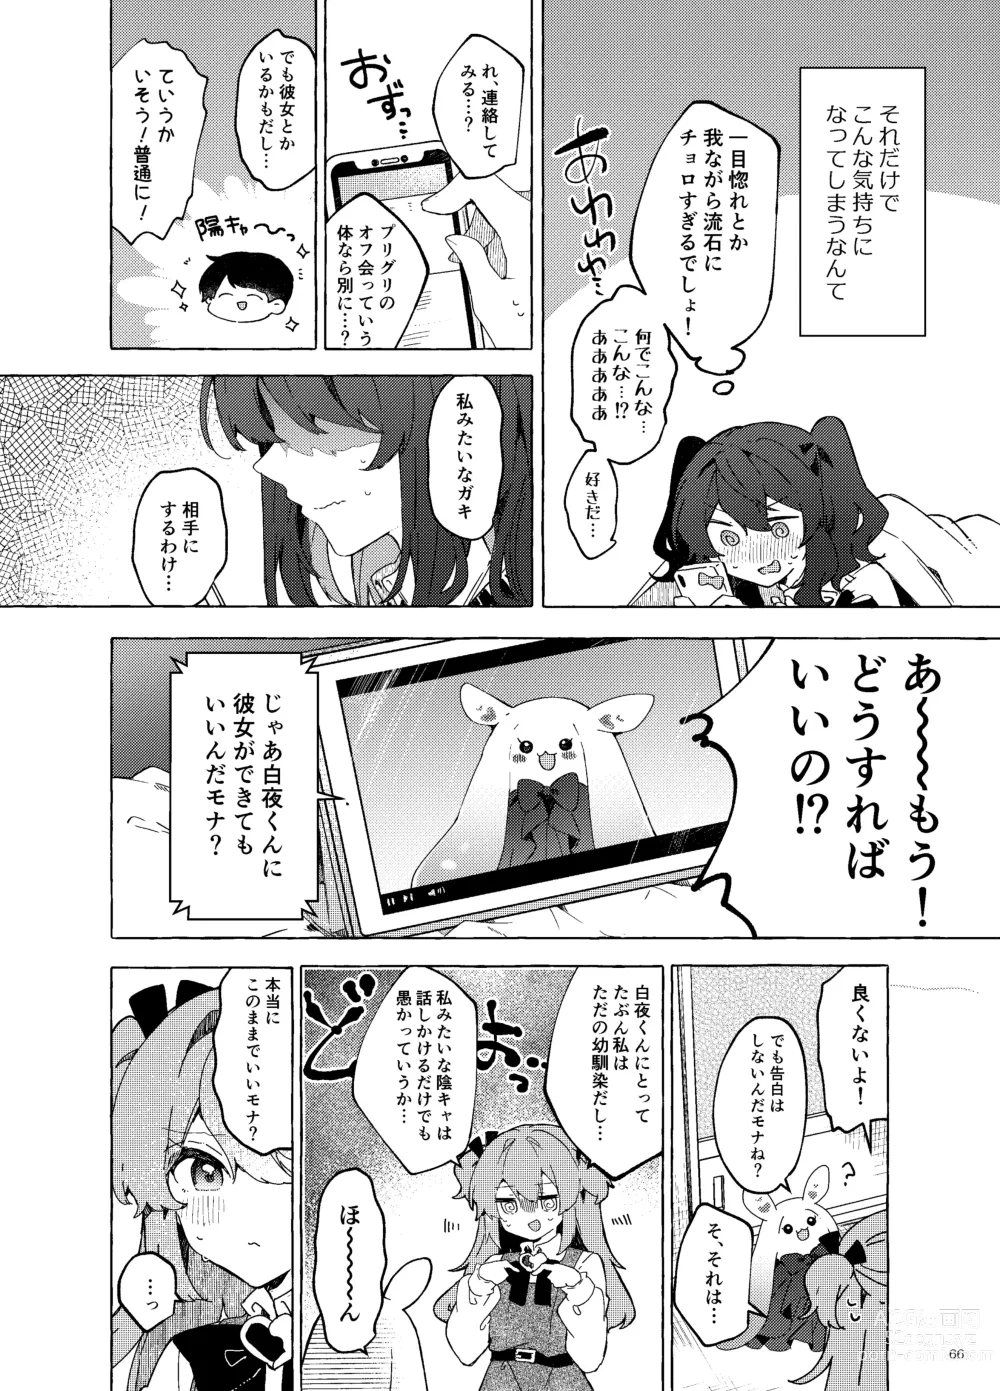 Page 67 of doujinshi Koi to Mahou to Etcetera - Love, Magic, and etc.